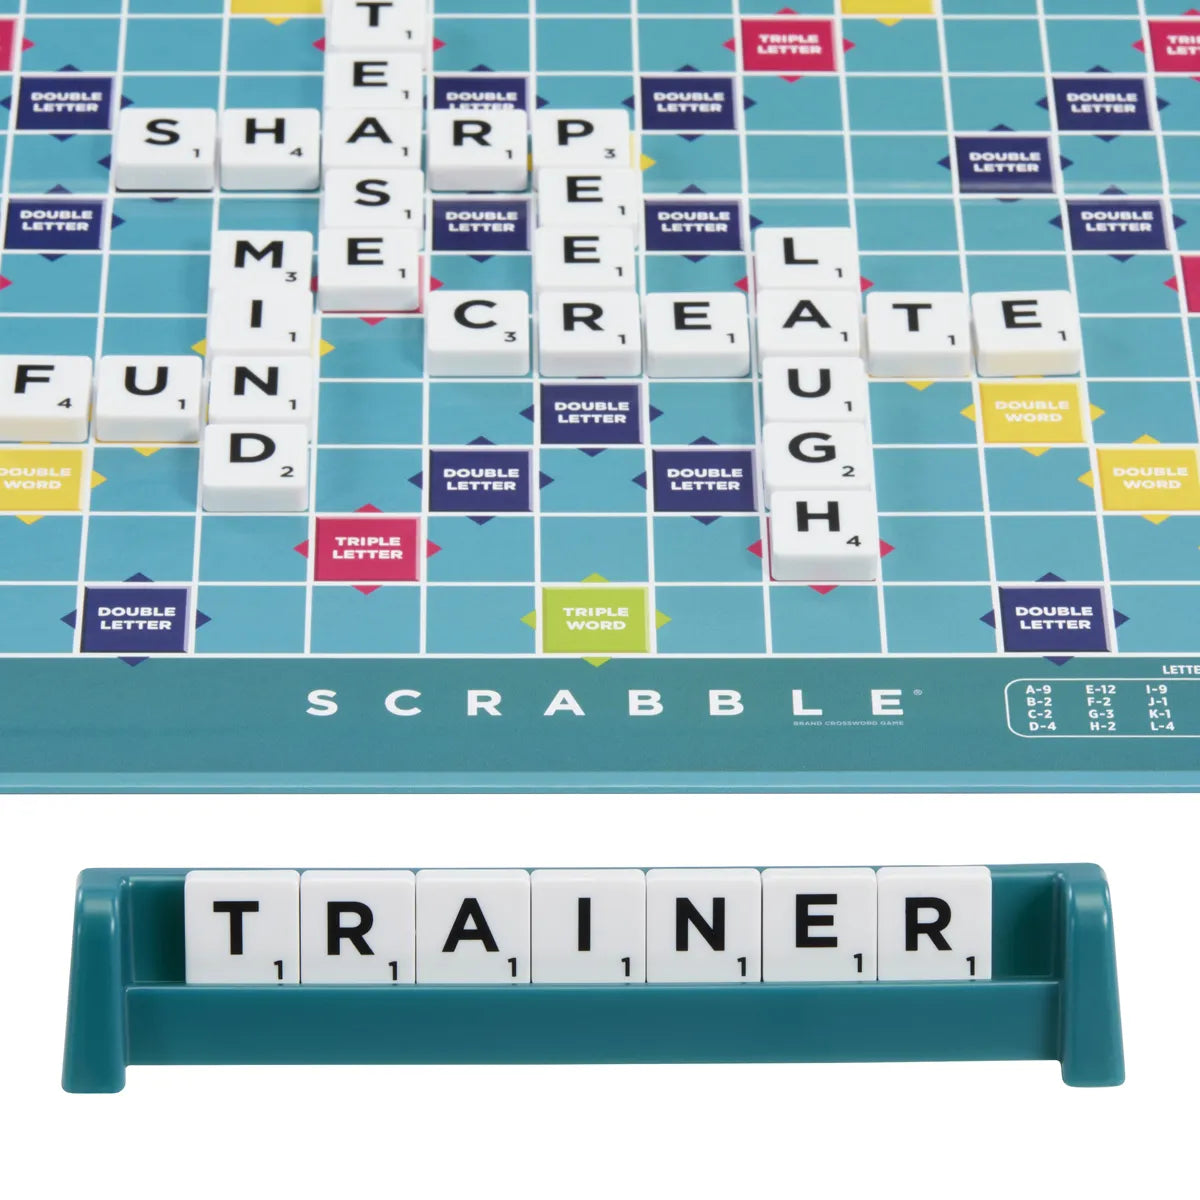 Scrabble 2-in-1 Double Sided Board Game